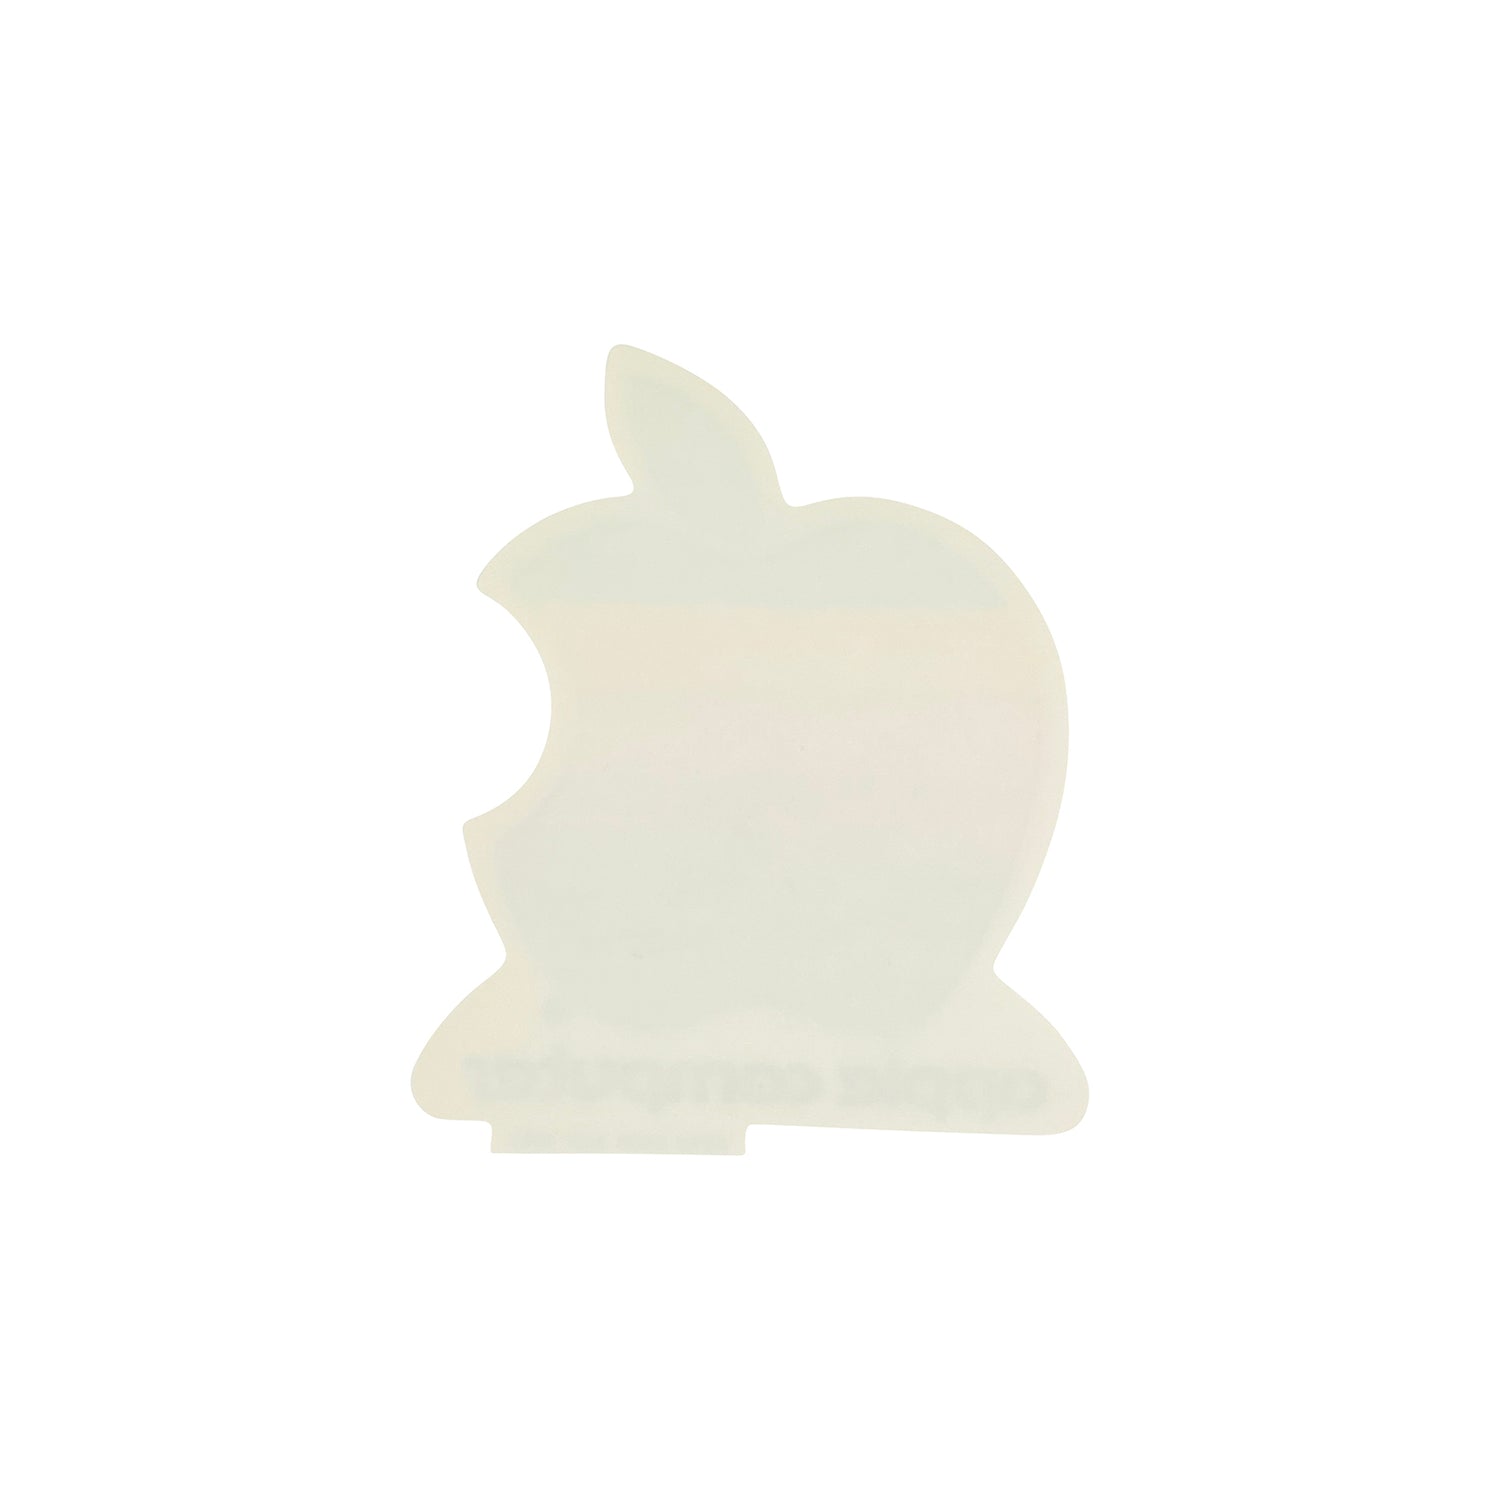 vintage apple logo